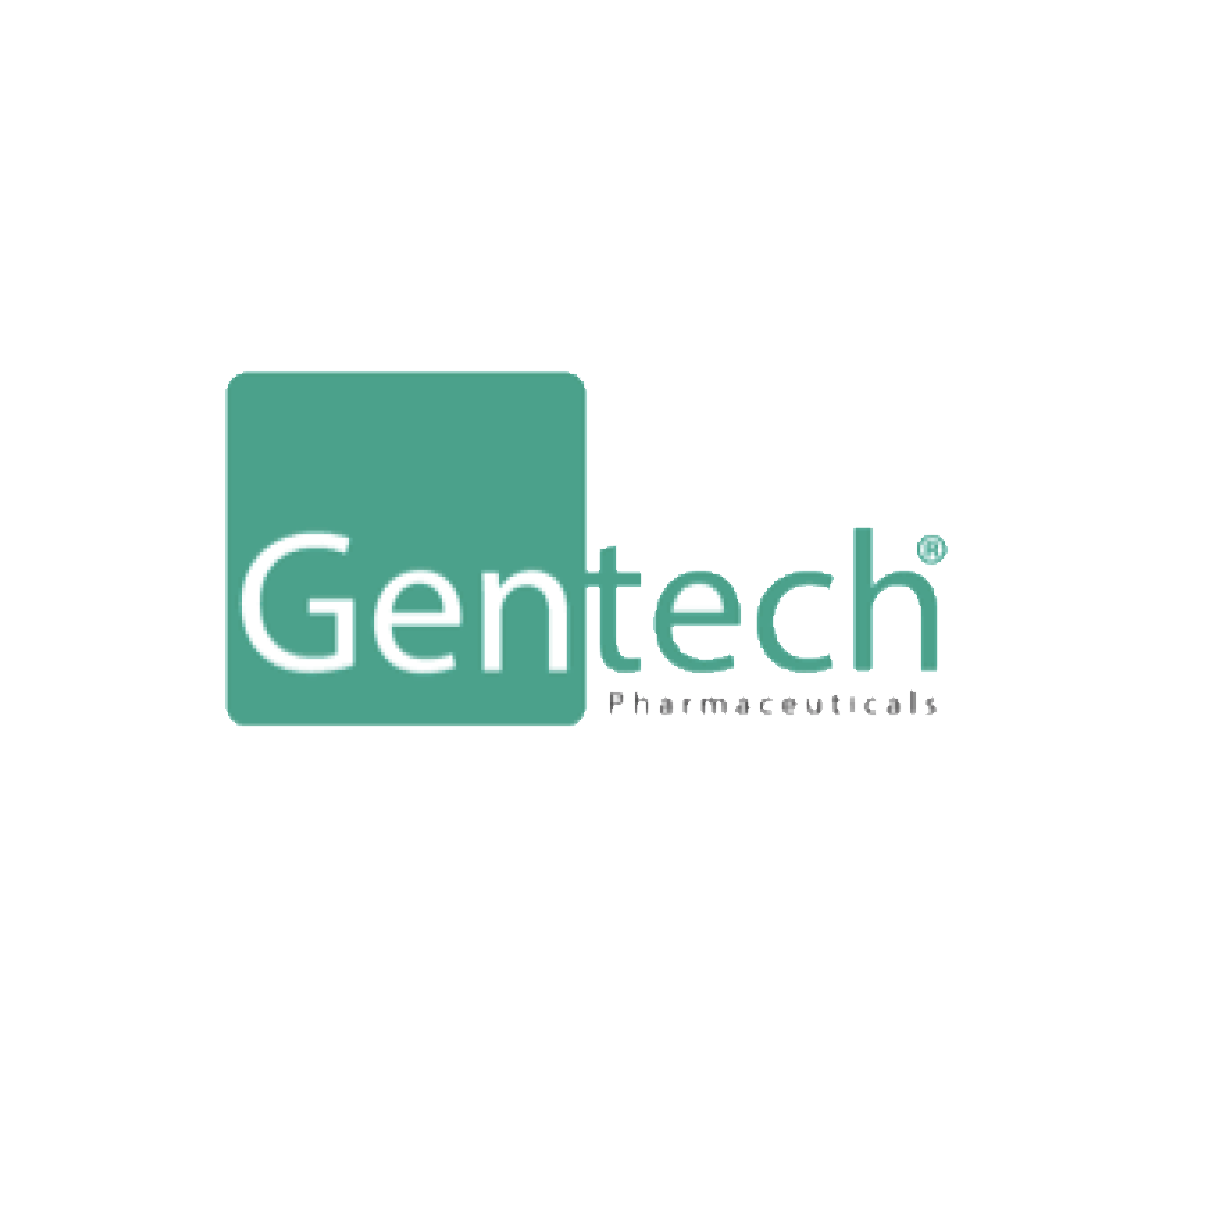 Gentech Pharmaceuticals